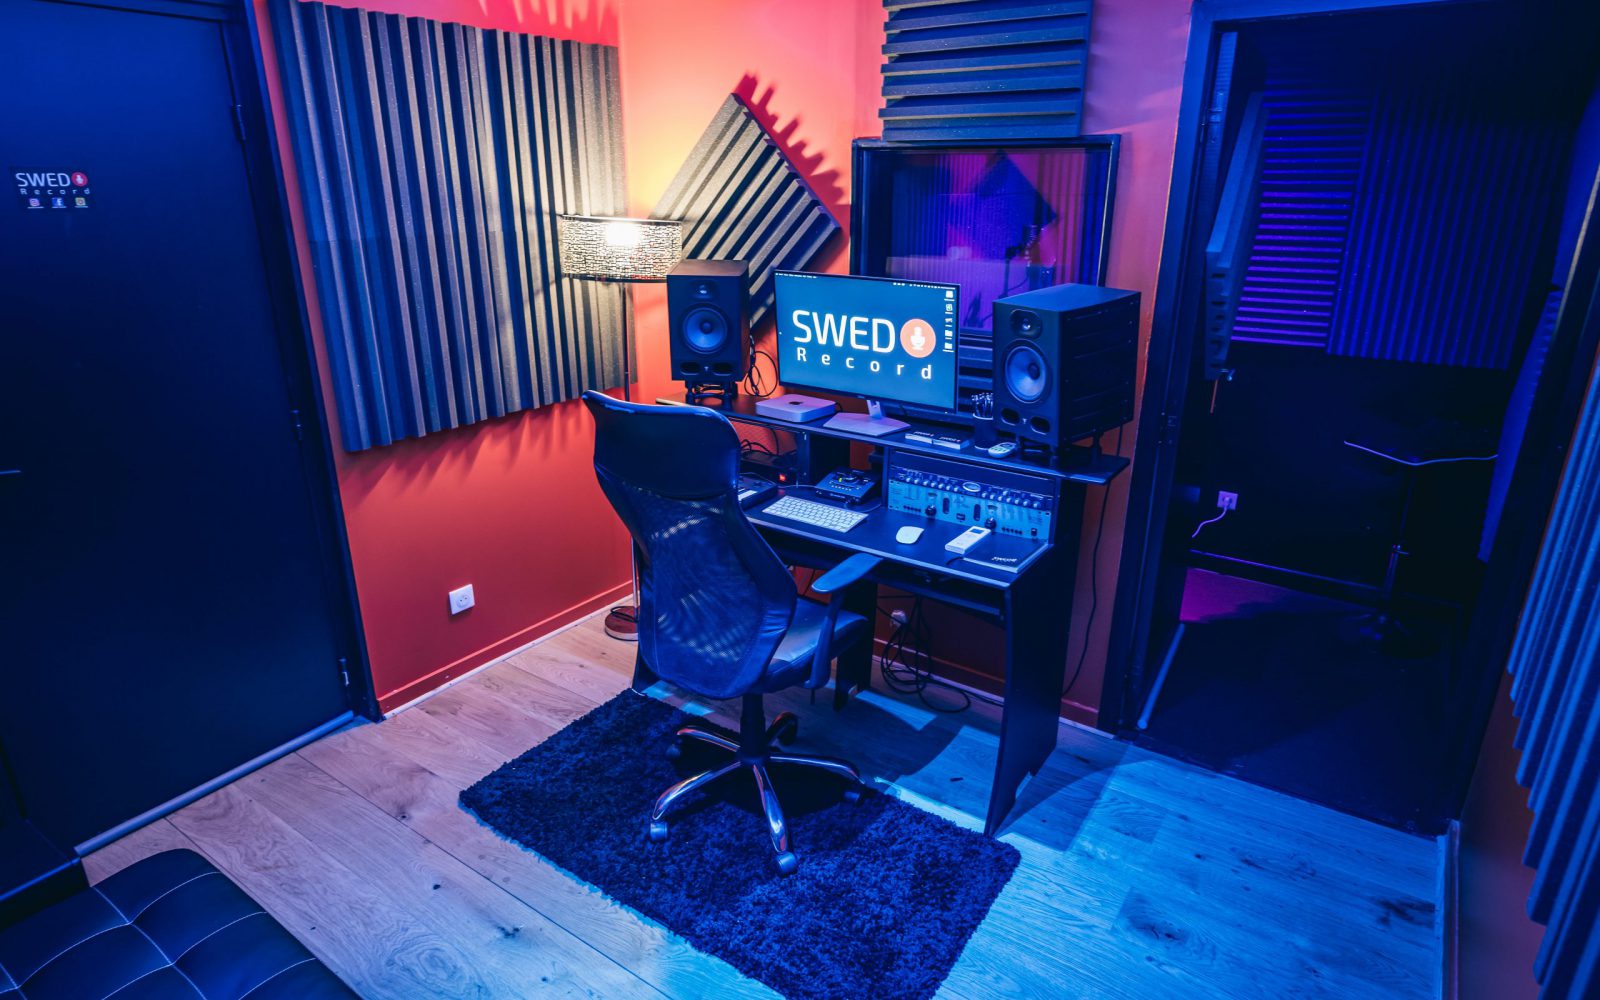 About Swed Record - Studio musique à Toulouse